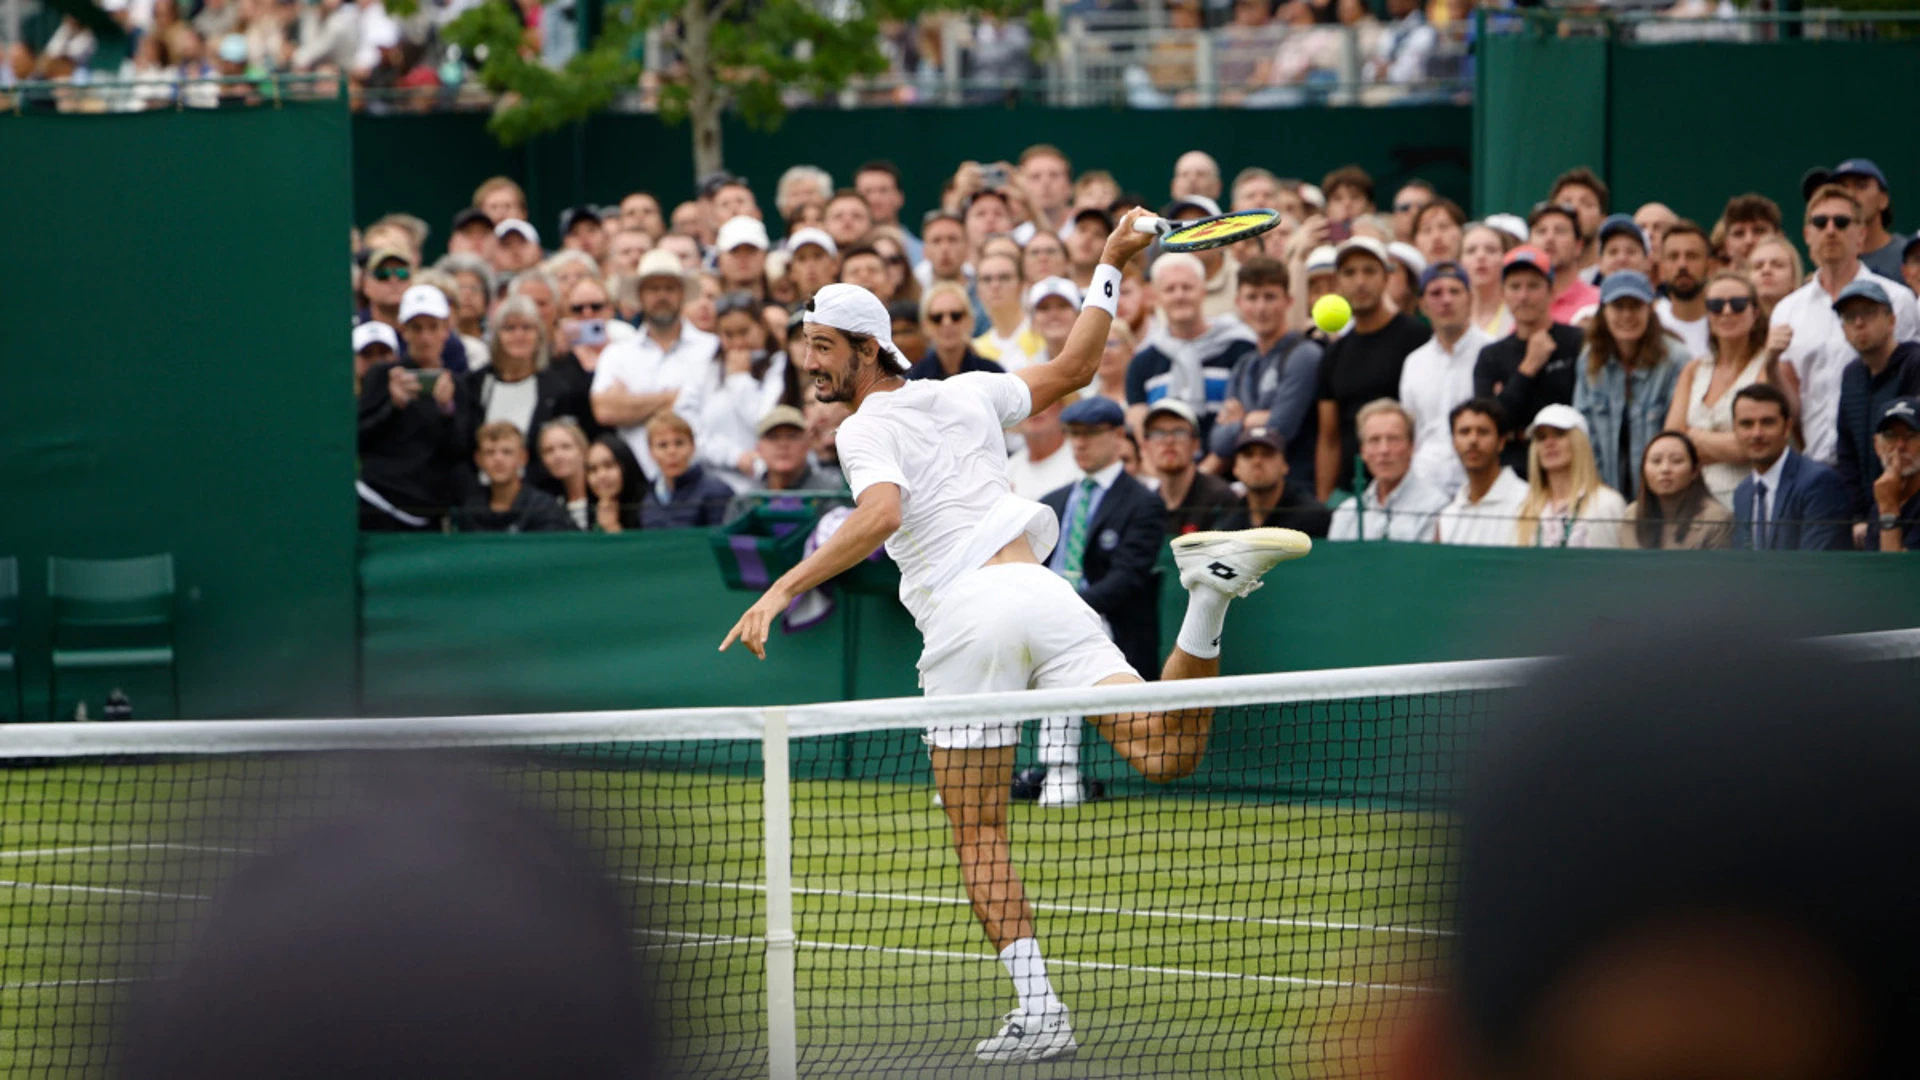 SA’s Harris triumphs in epic five-set battle to advance at Wimbledon